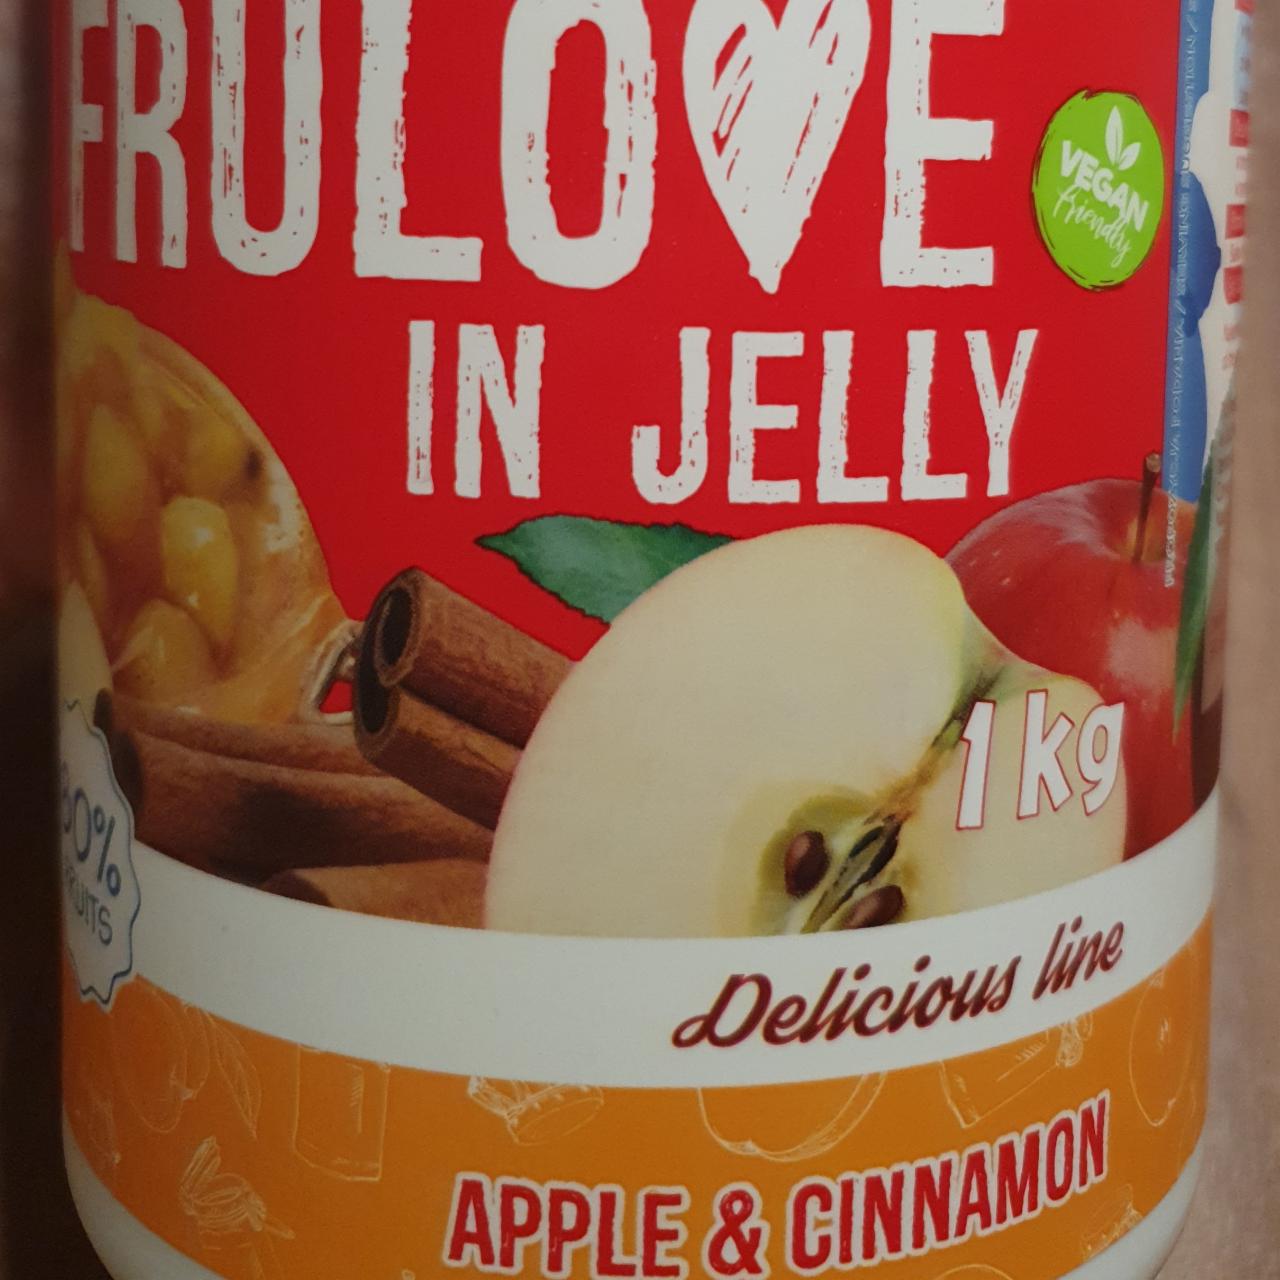 Fotografie - Frulove in jelly apple & cinnamon